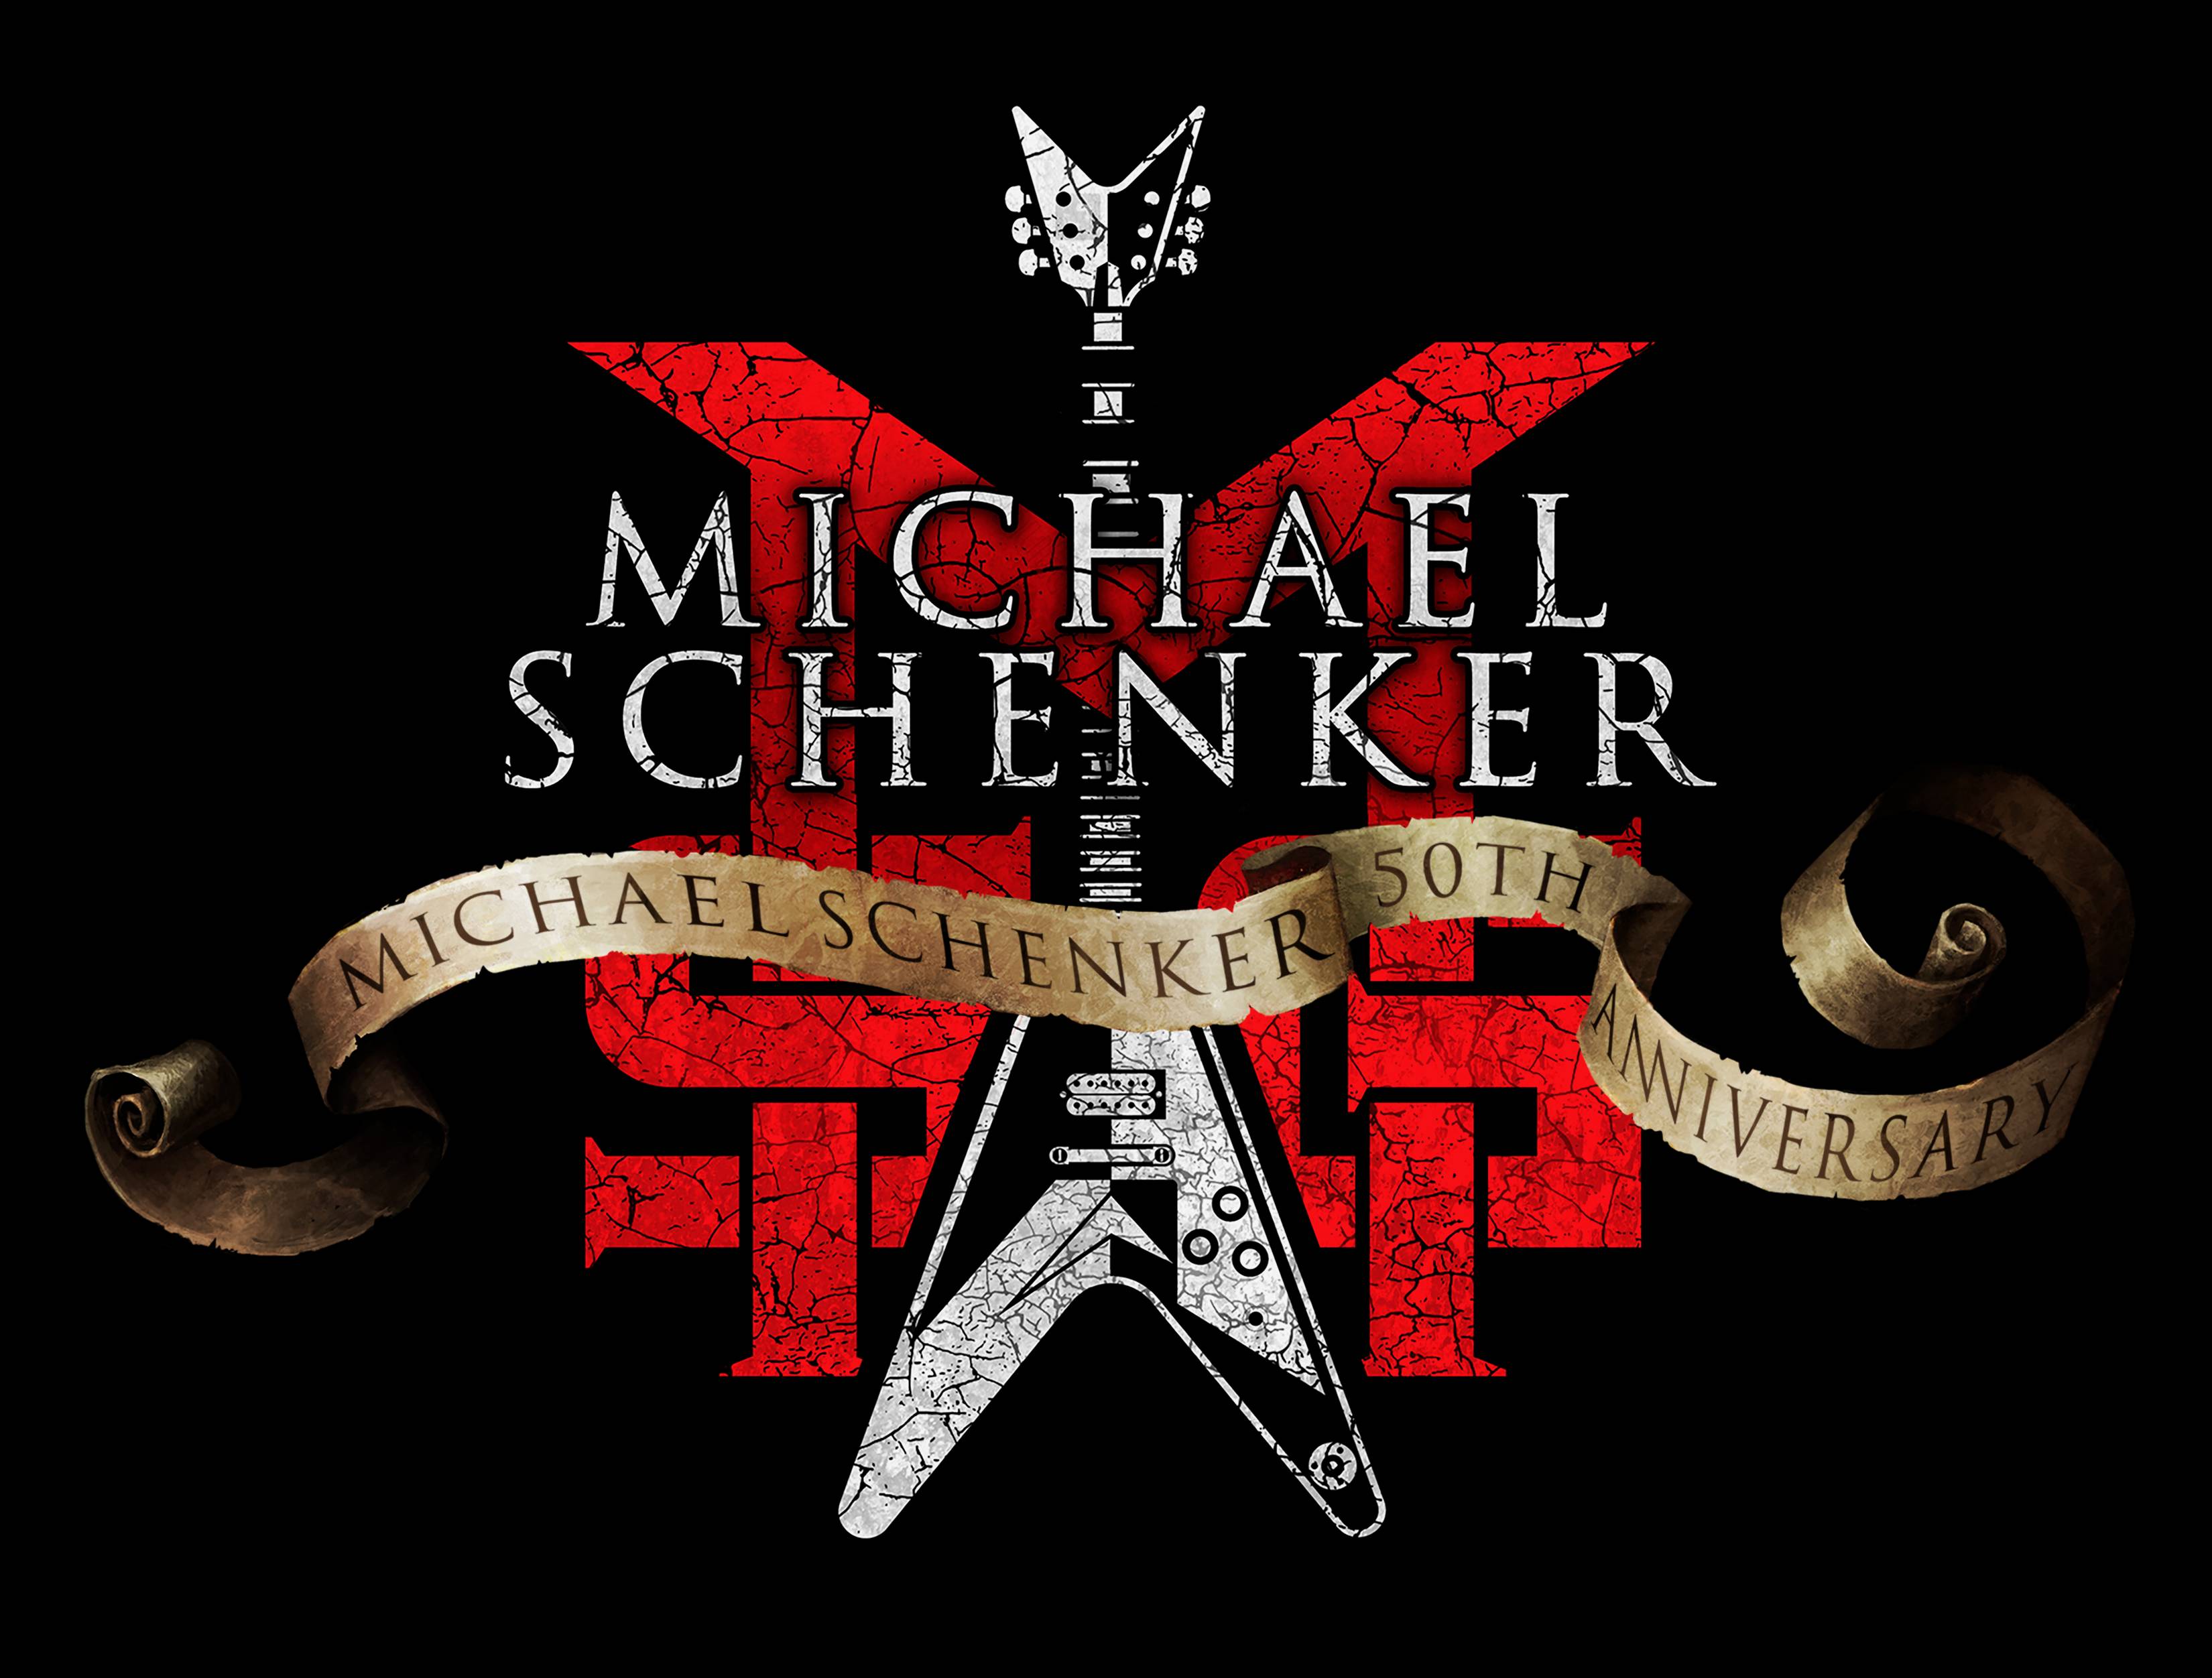 MICHAEL SCHENKER – UNIVERSAL (Review)